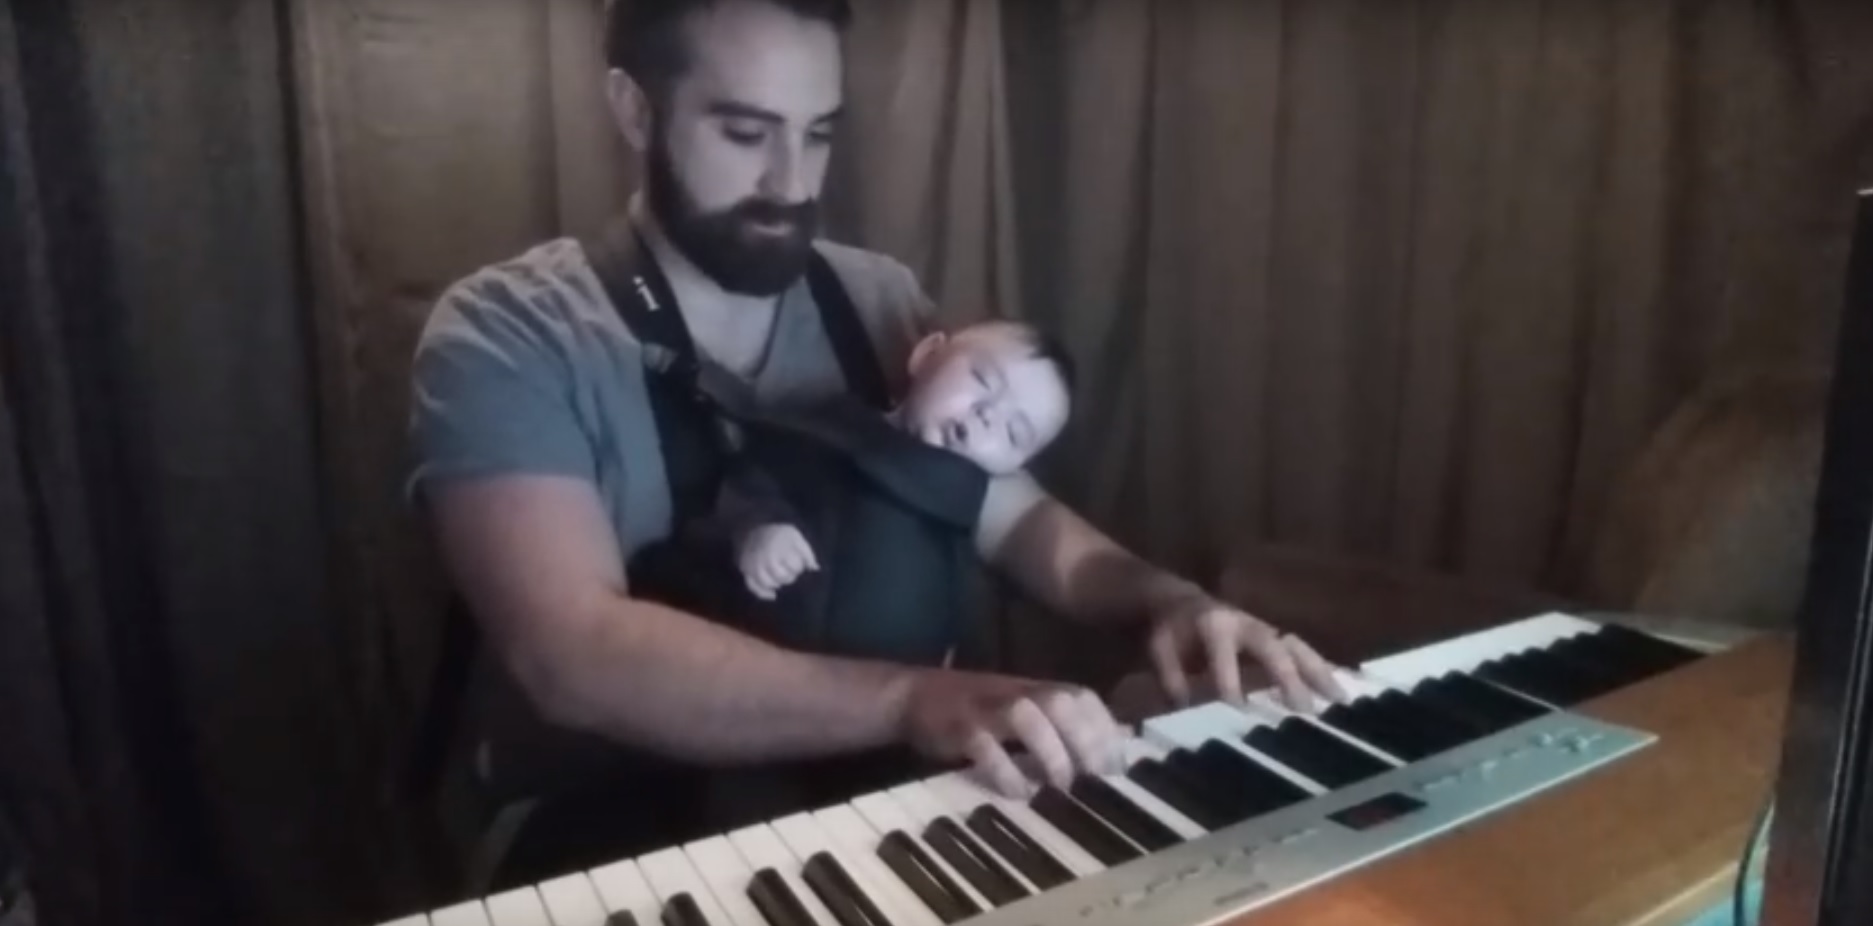 Uns acordes de piano e este bebé adormece instantaneamente [vídeo]